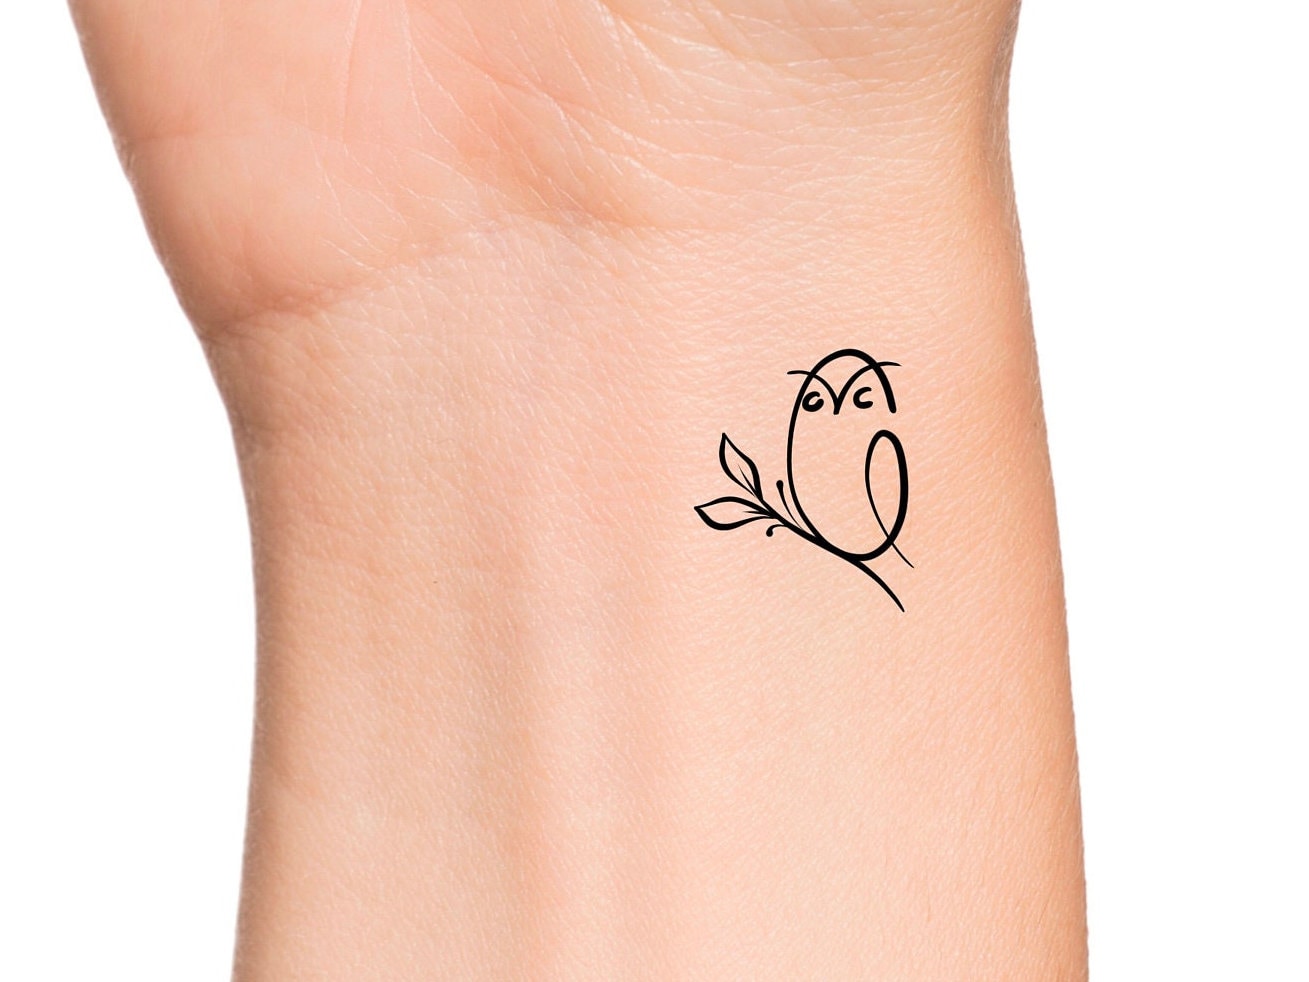 4. Small owl tattoos - wide 9